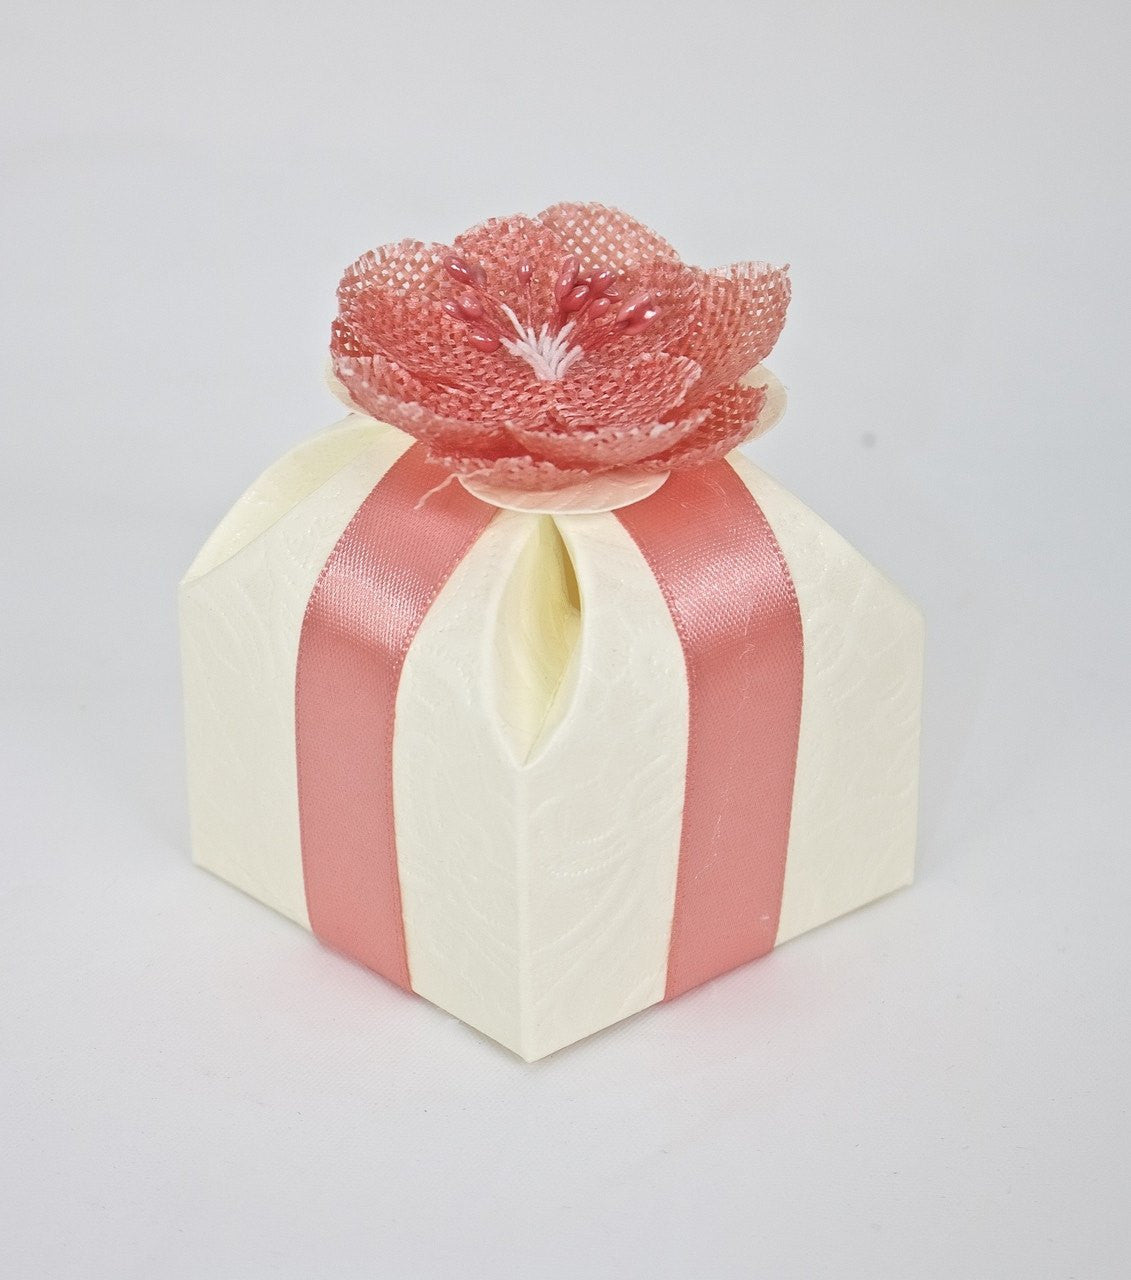 12 pcs- Italian White or Ivory Dome Flower Favor Box